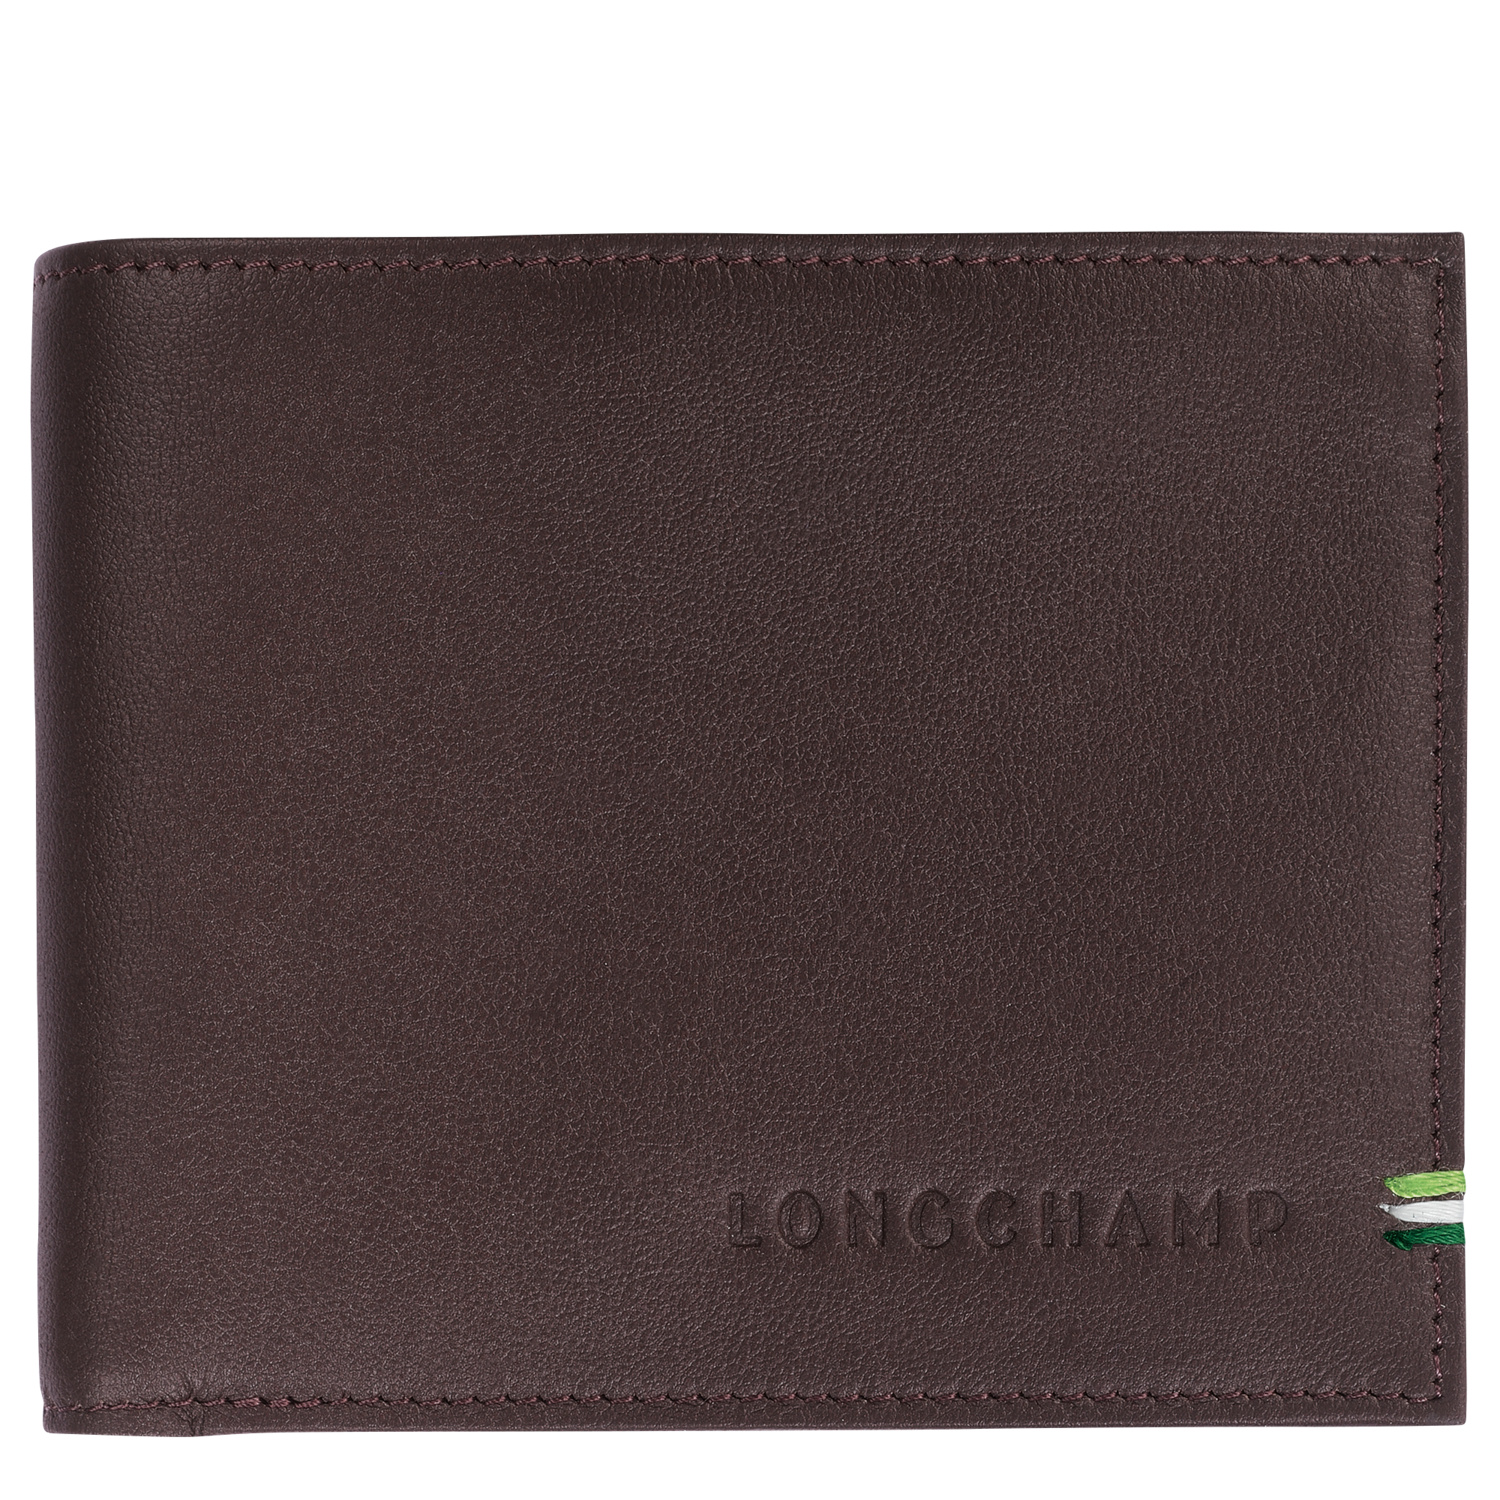 Longchamp Wallet  Sur Seine In Mocha